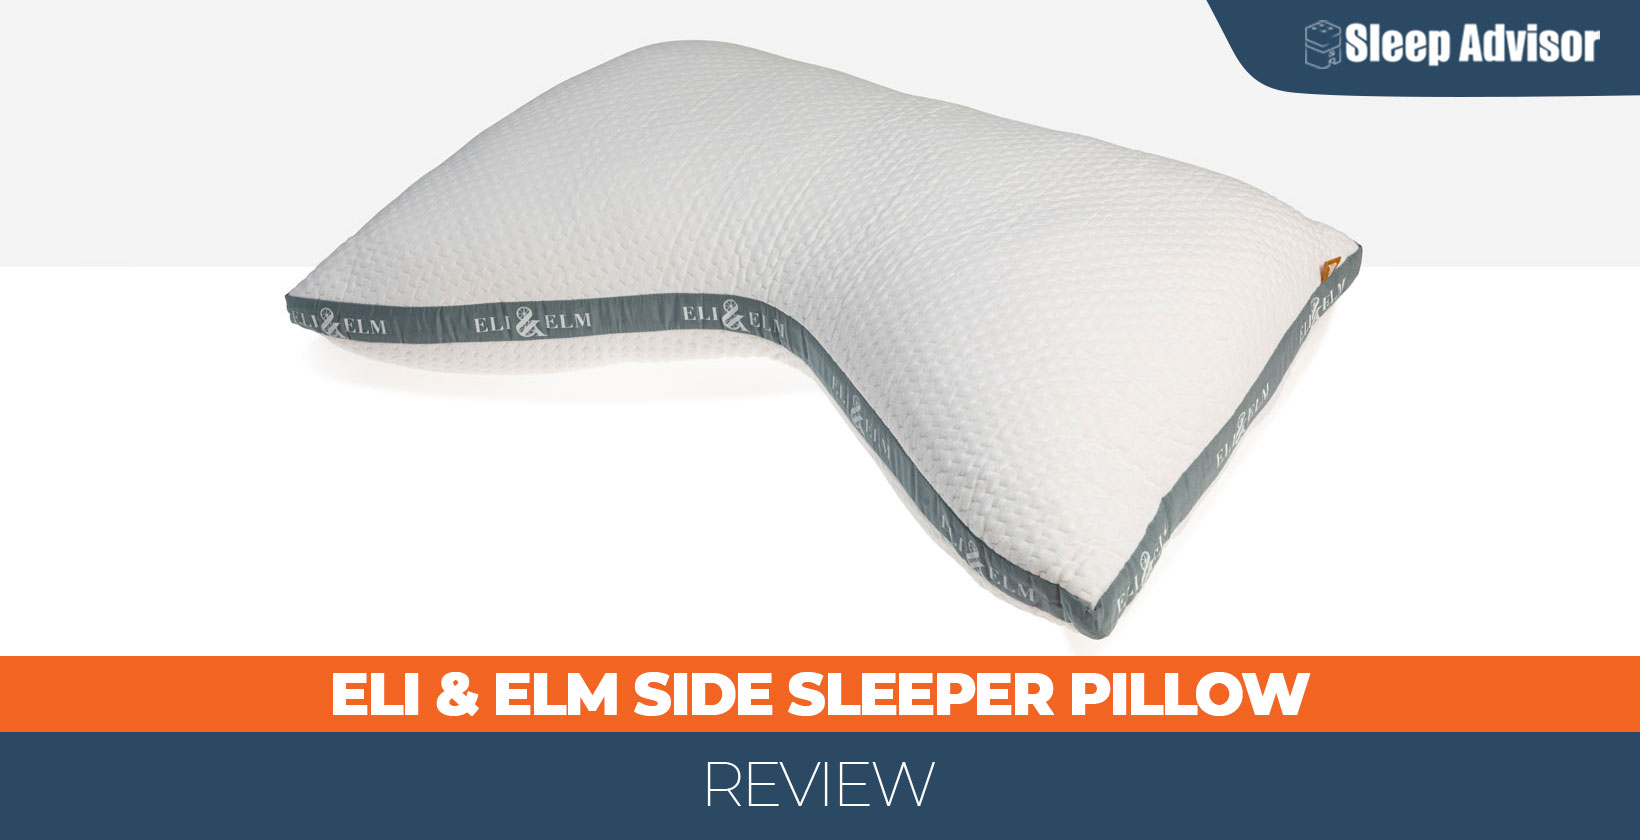 Eli & Elm side sleeper pillow review 1640x840px